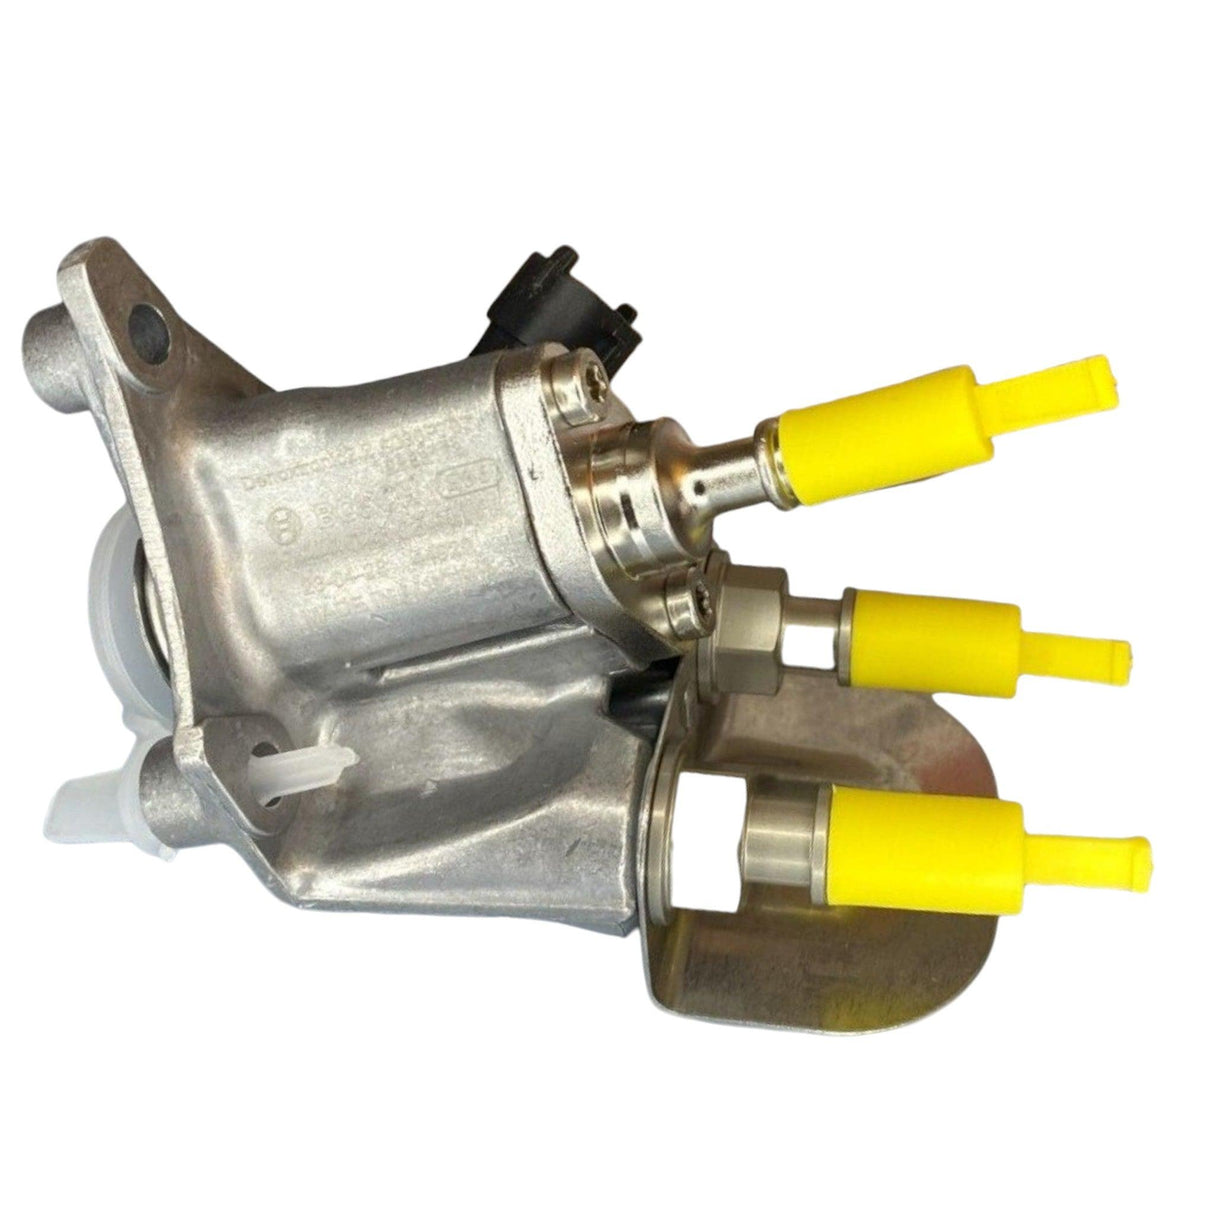 2888173Nx Genuine Cummins® Diesel Exhaust Fluid Doser Injector 2.2.